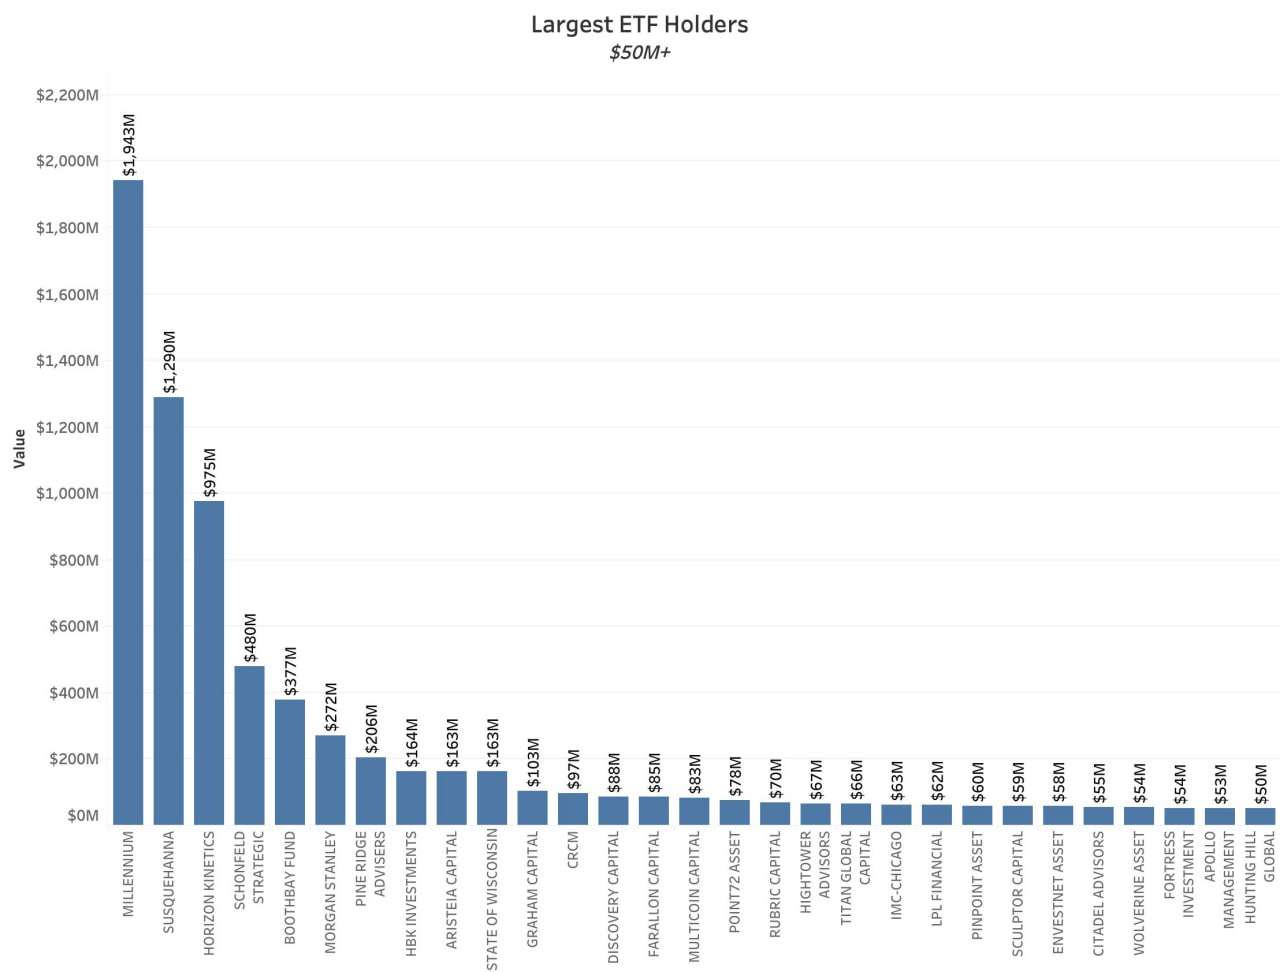 Largest ETF Holders $50M+.